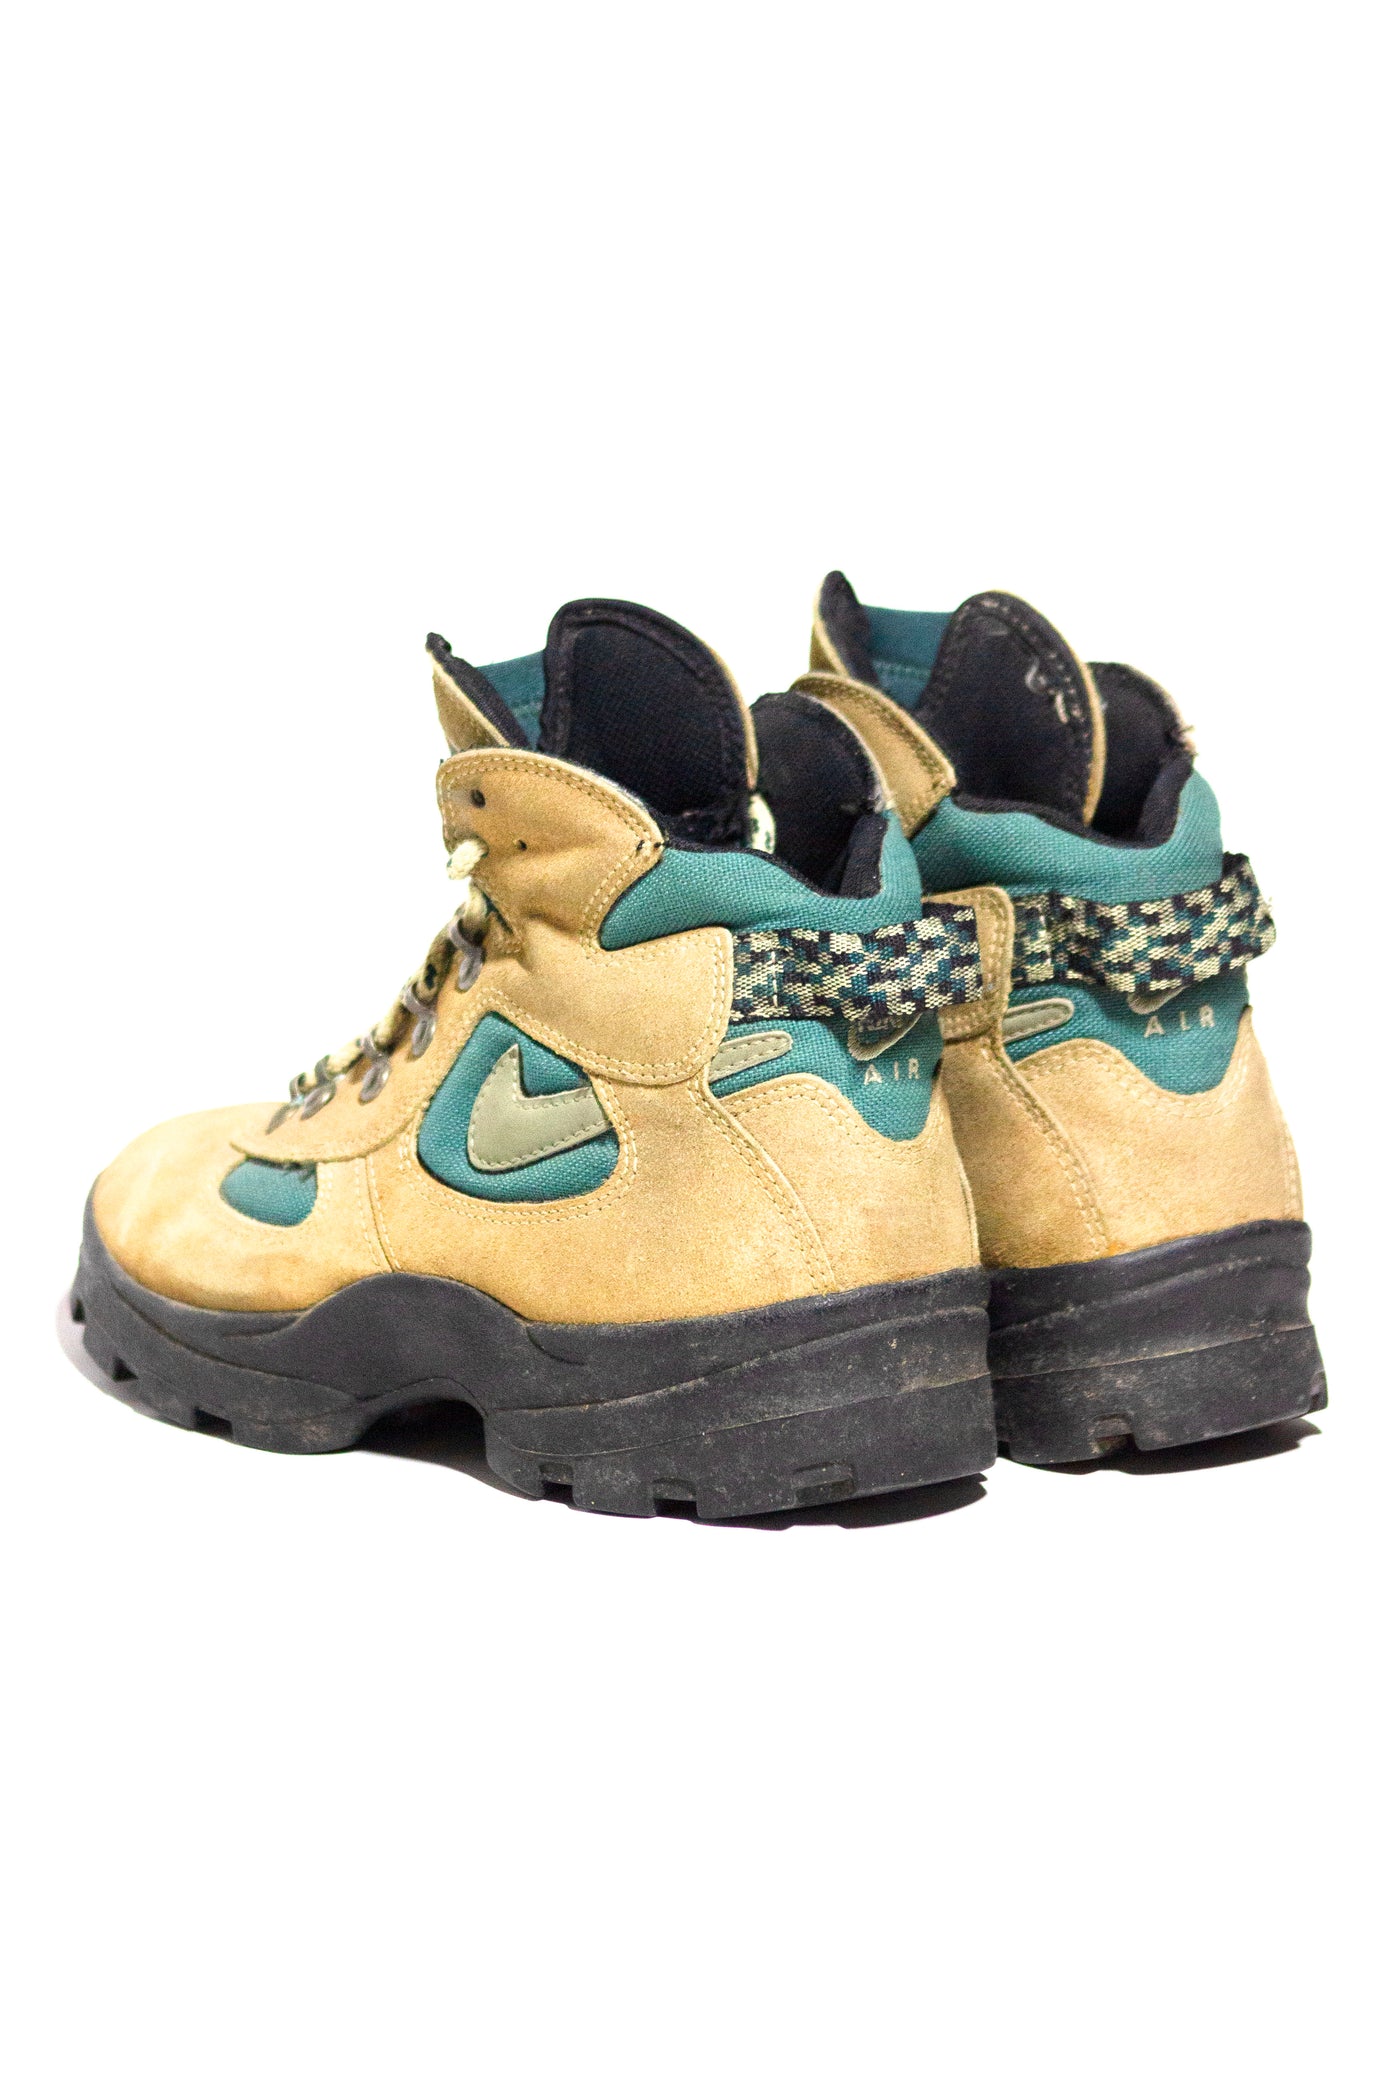 Vintage 1995 Nike ACG Hiking Boots - Caldera Grateful Threads